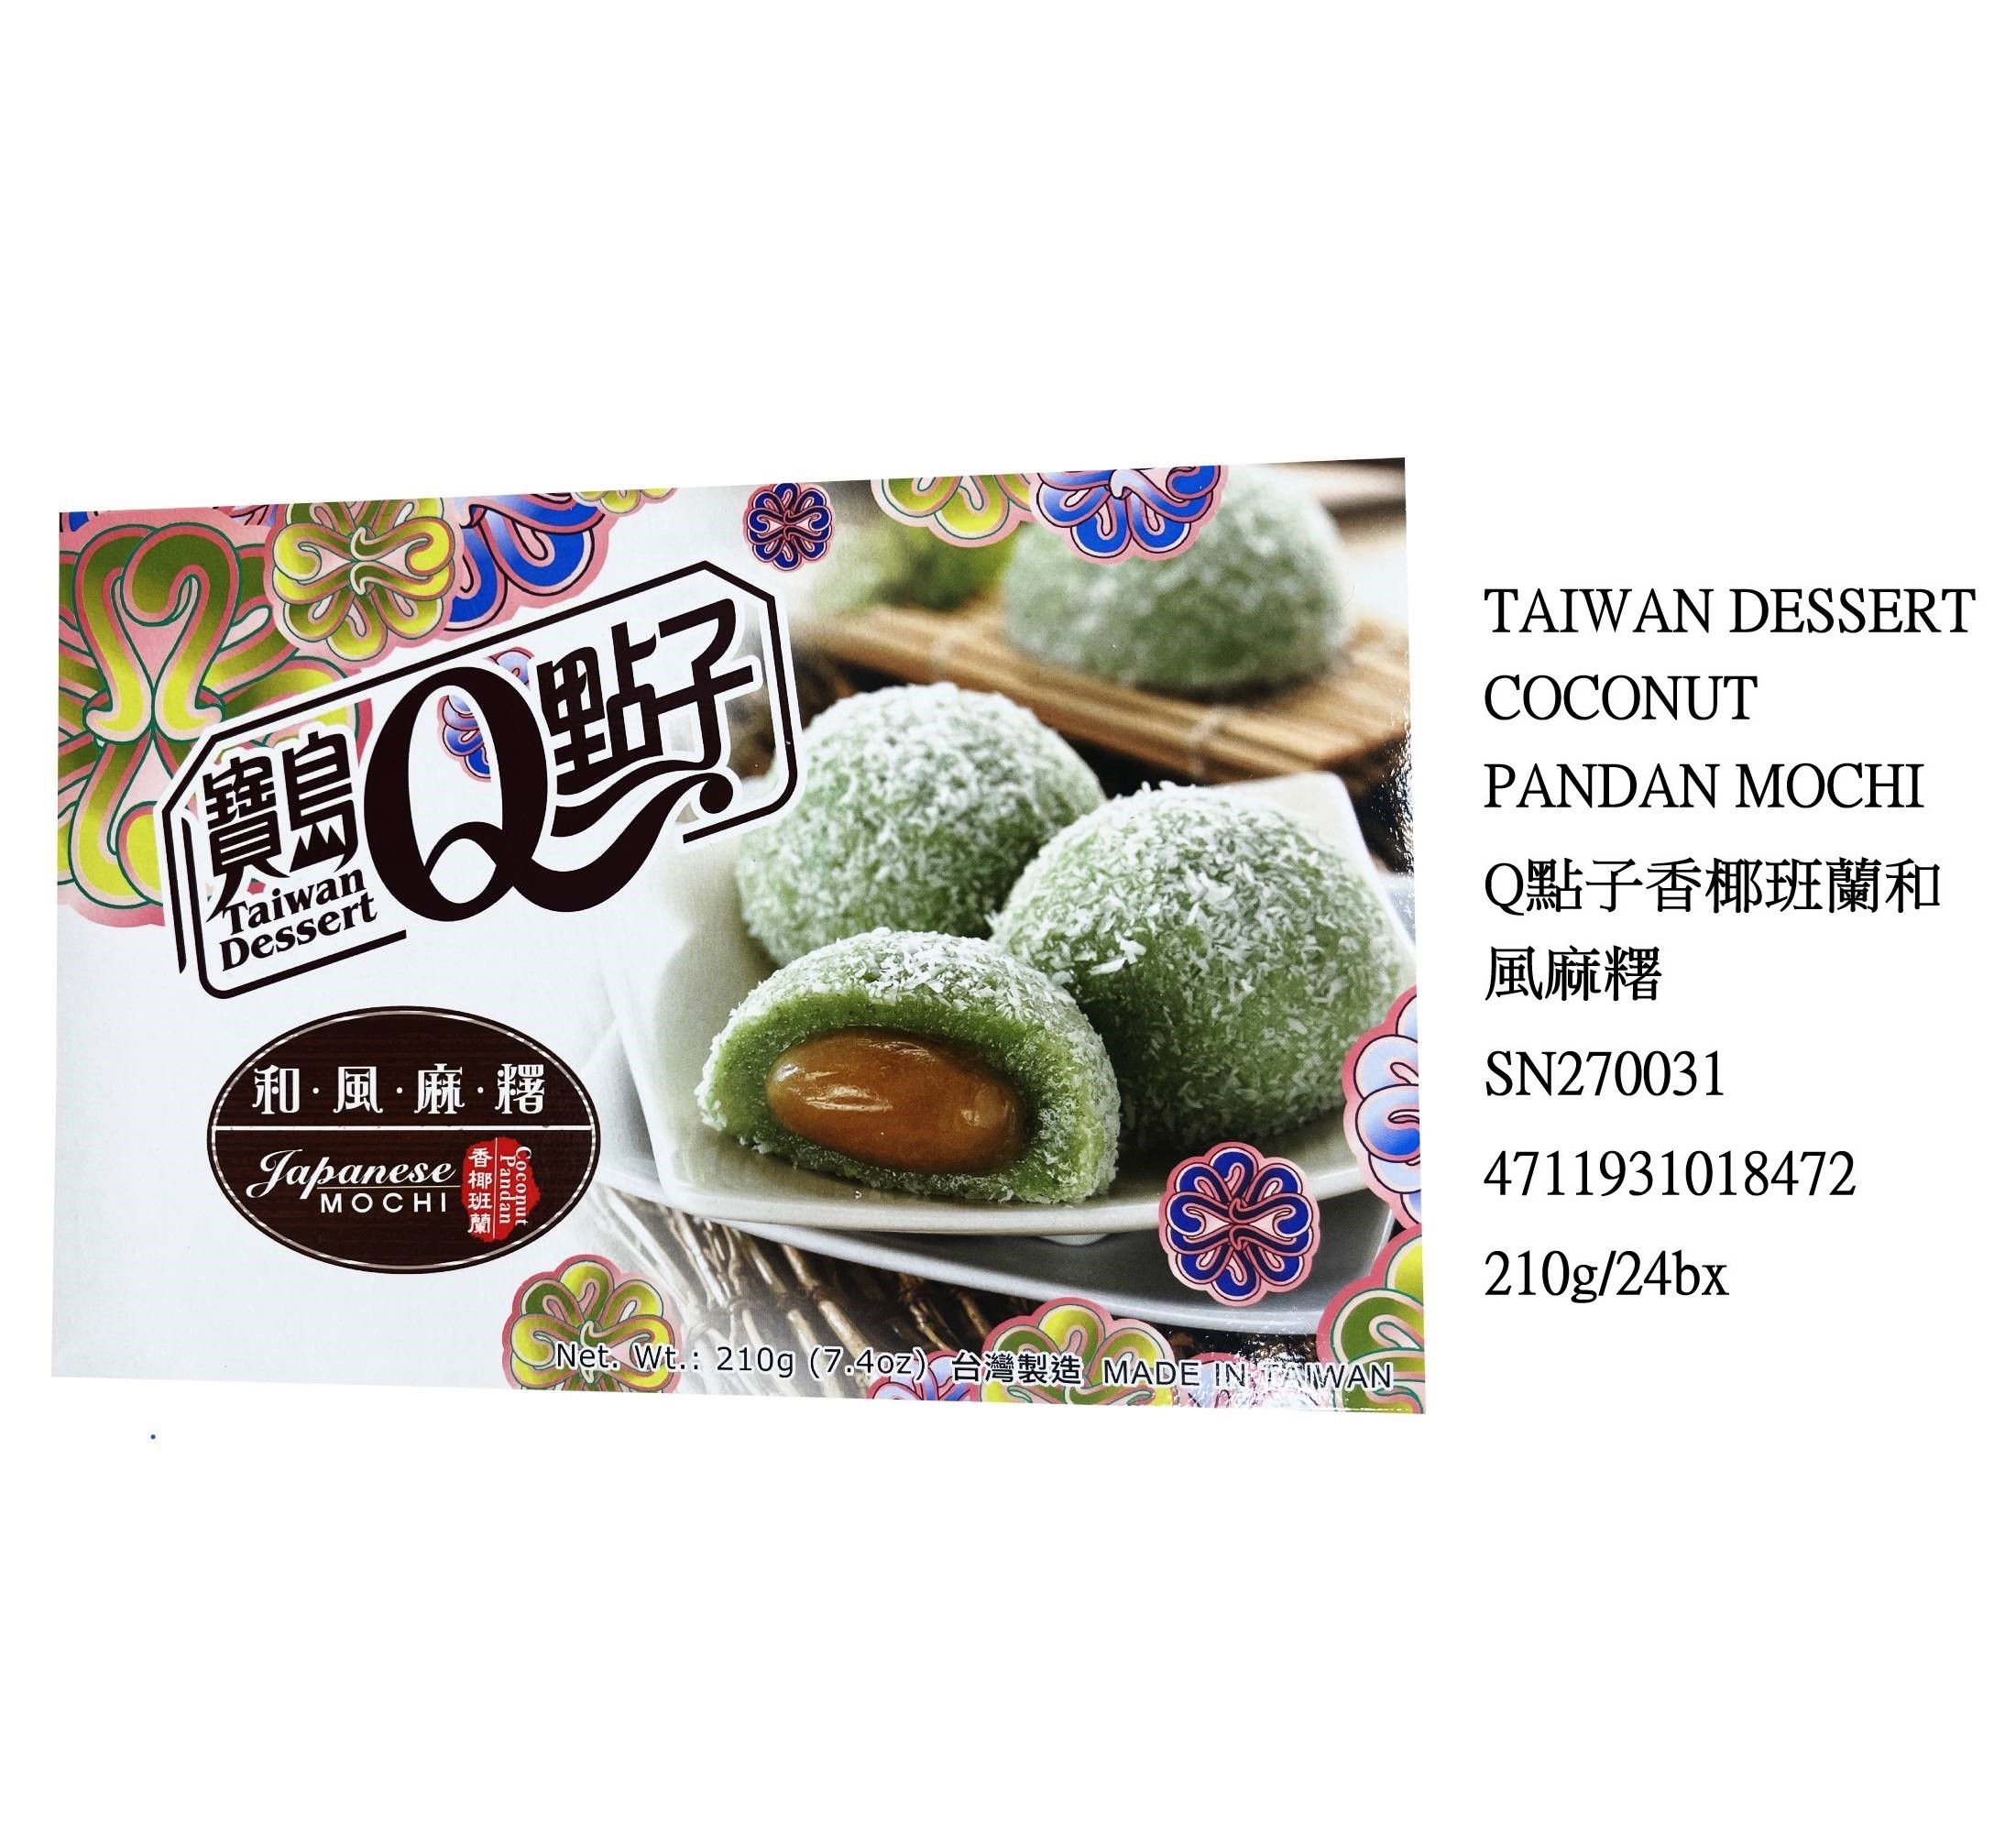 TAIWAN DESSERT COCONUT PANDAN MOCHI SN270031